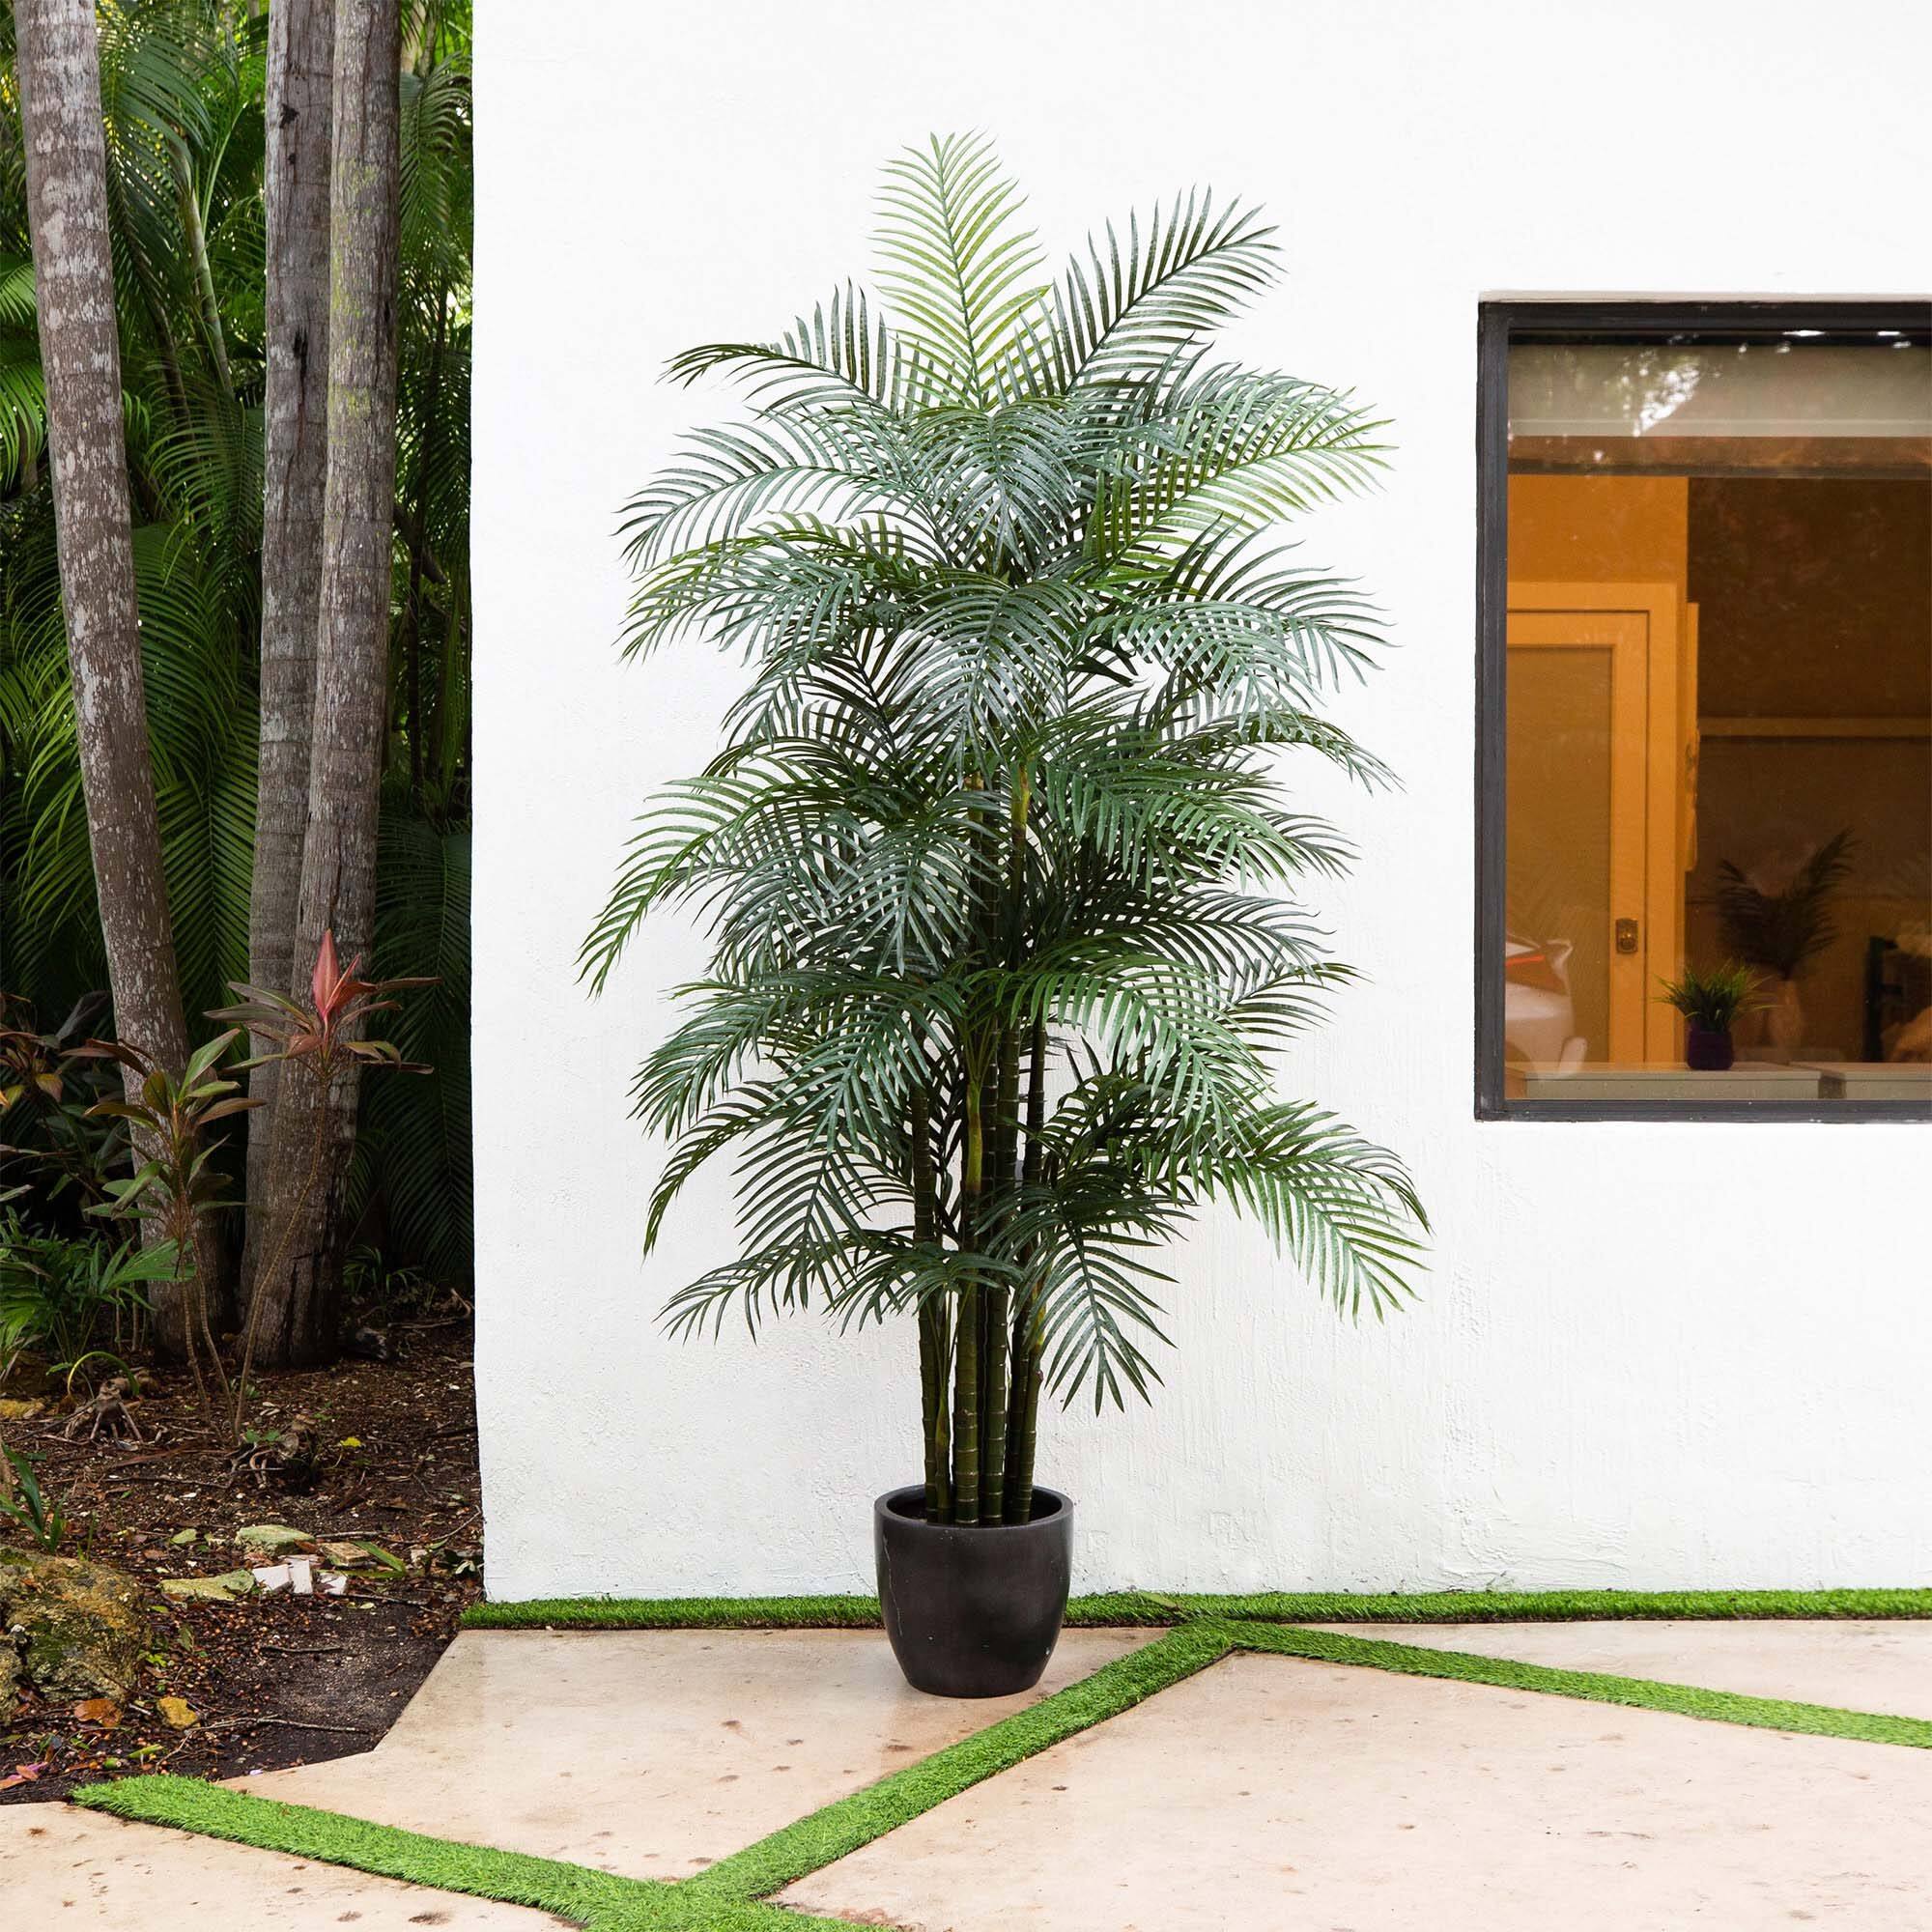 9ft. UV Resistant Areca Palm Tree